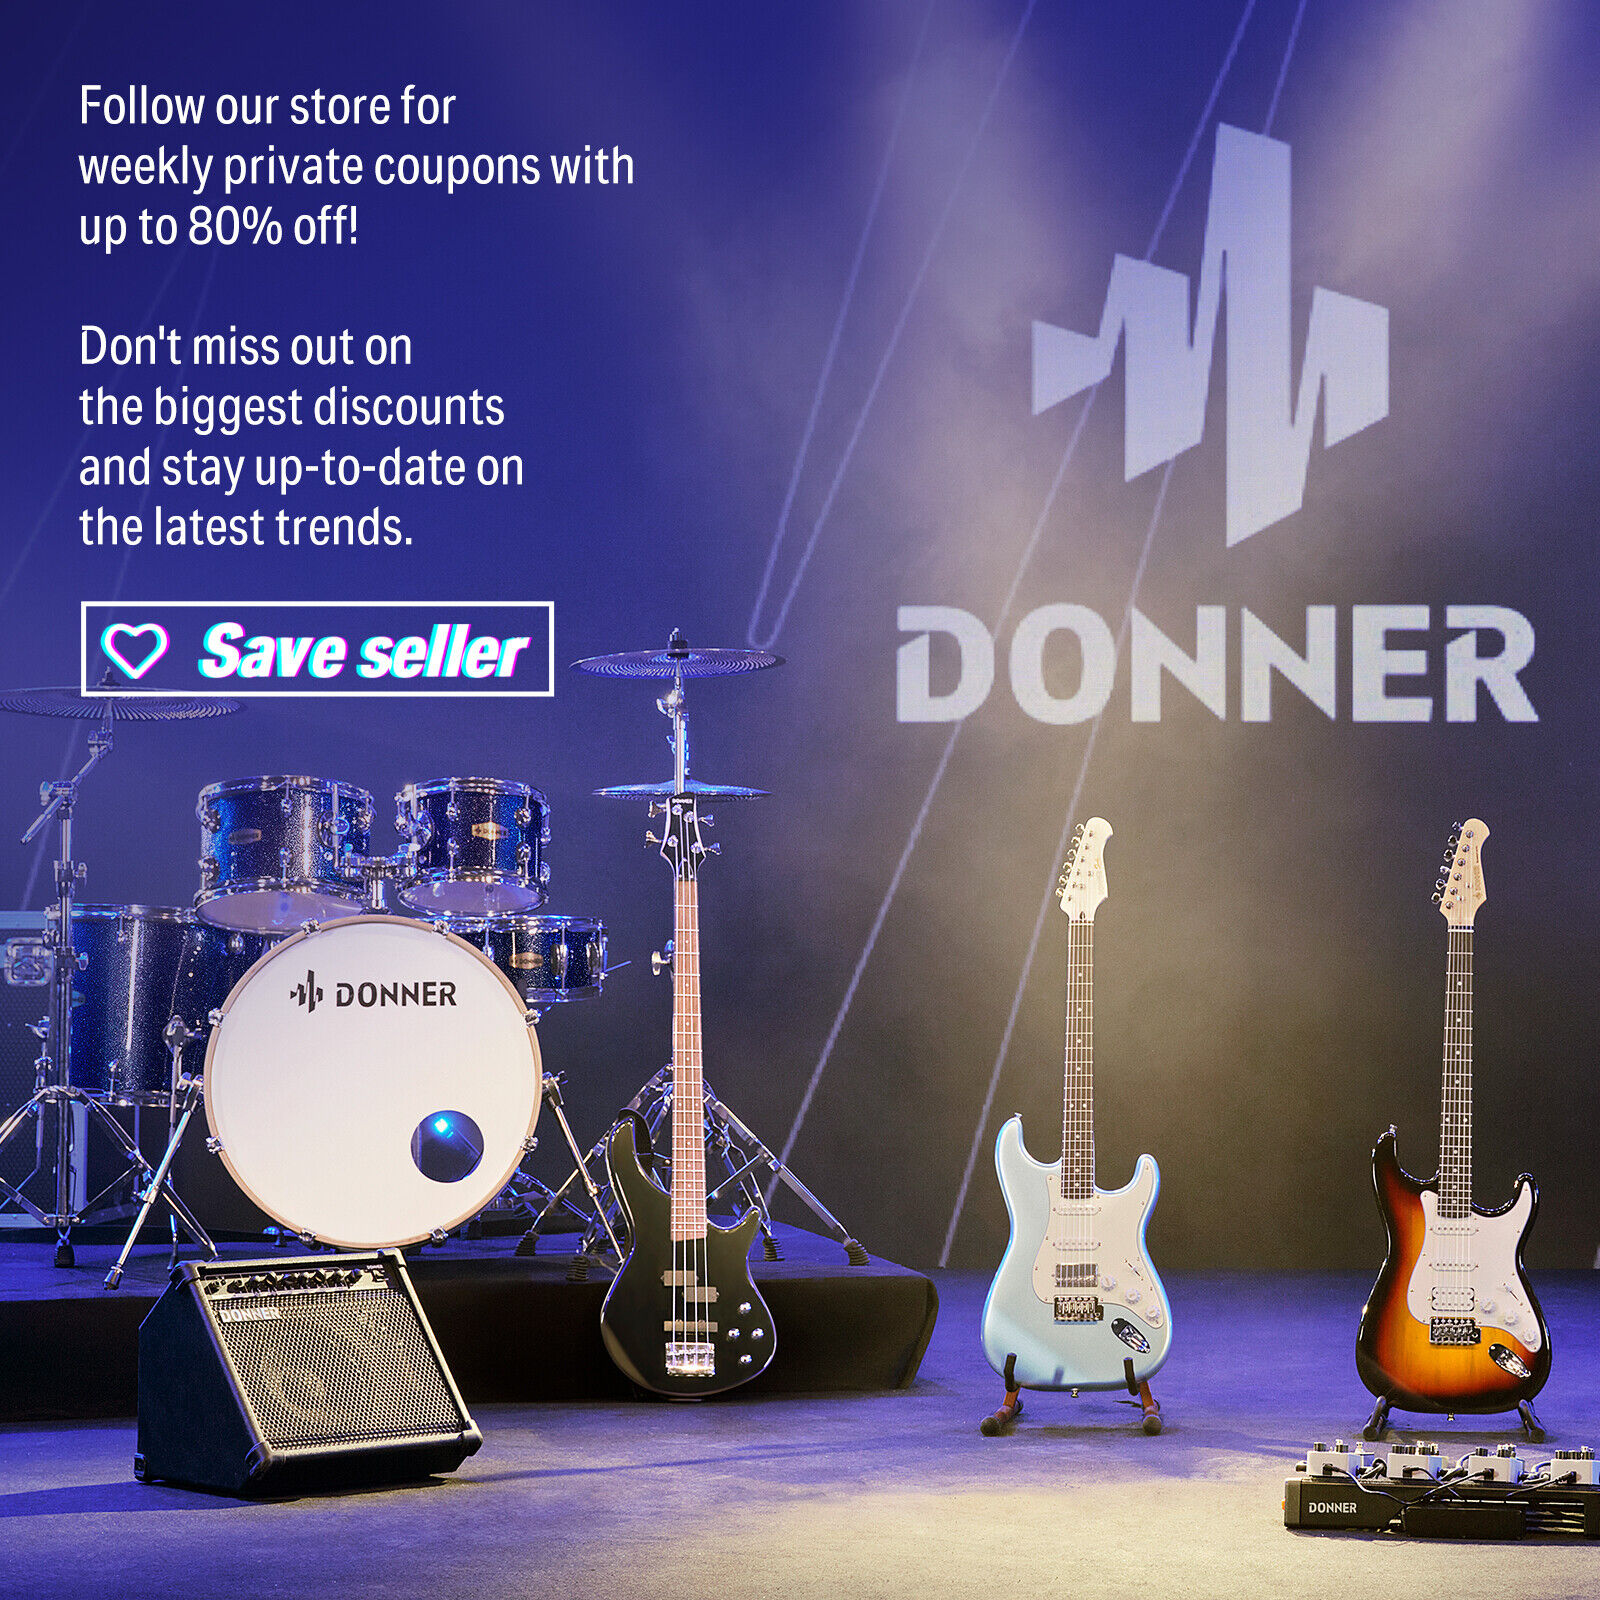 Zension 7″ and 8″ BONGO DRUMS – Latin Percussion Bongos Set Cowhide Tuning Key 4